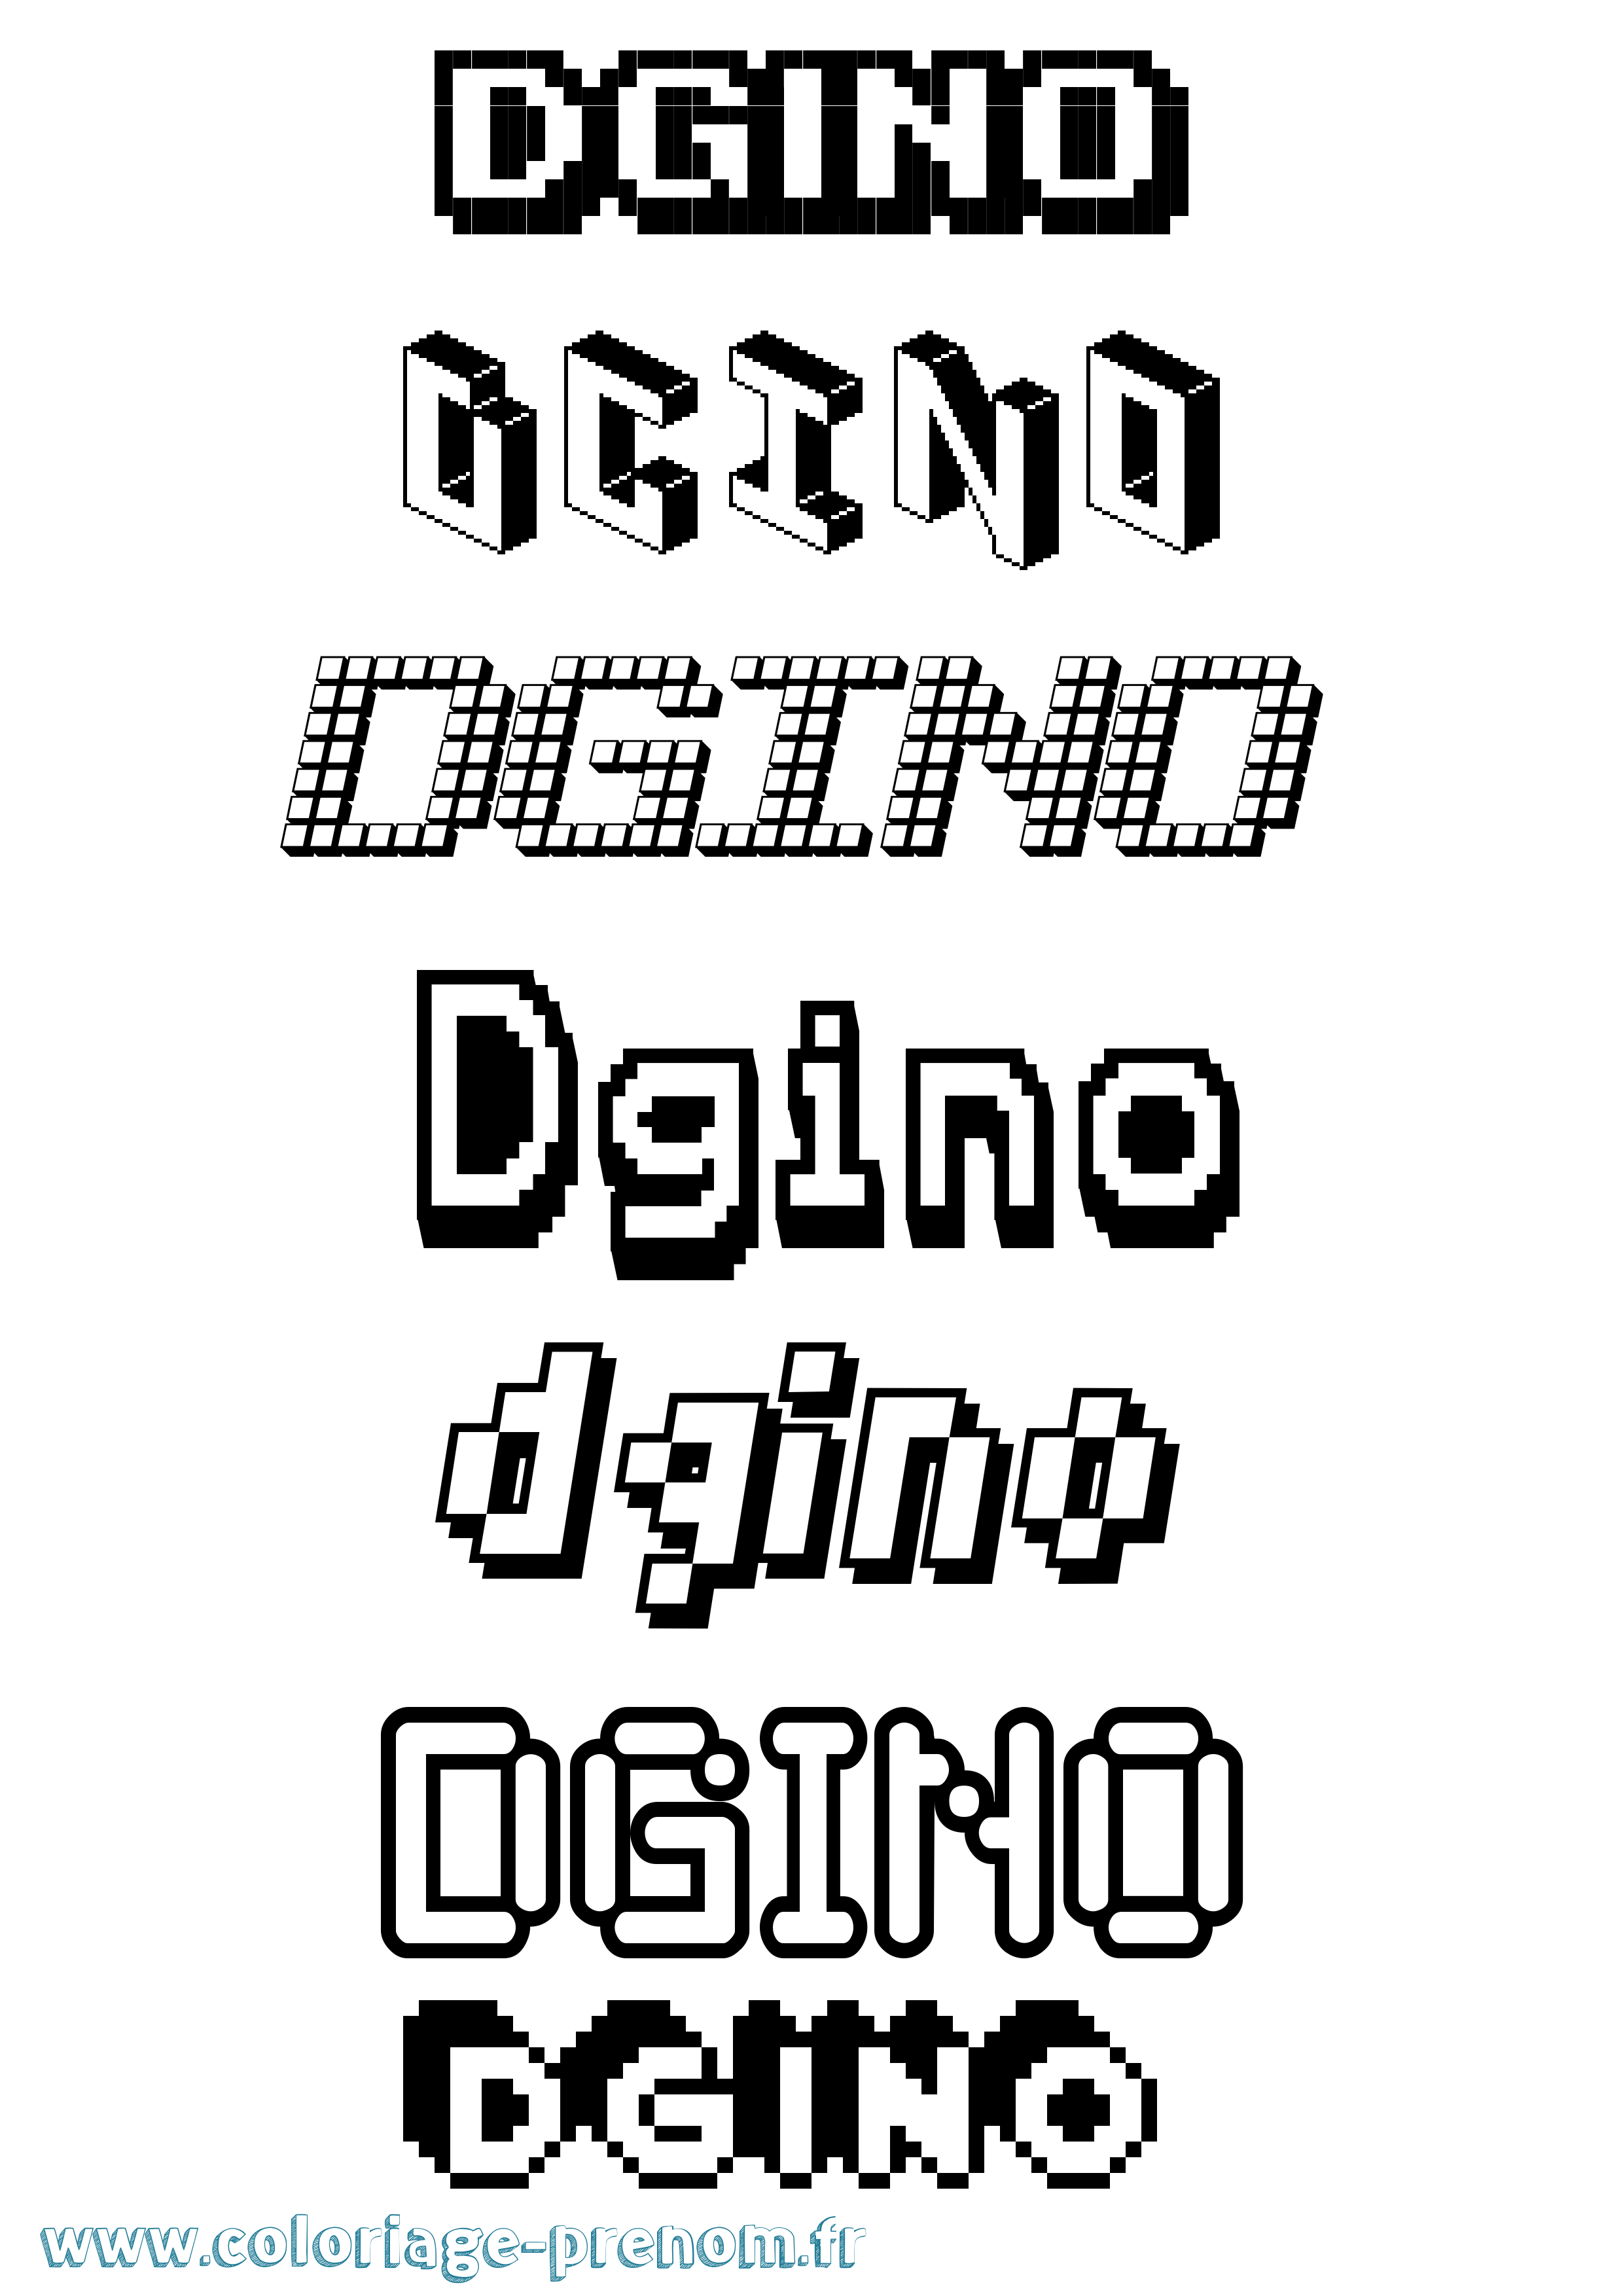 Coloriage prénom Dgino Pixel